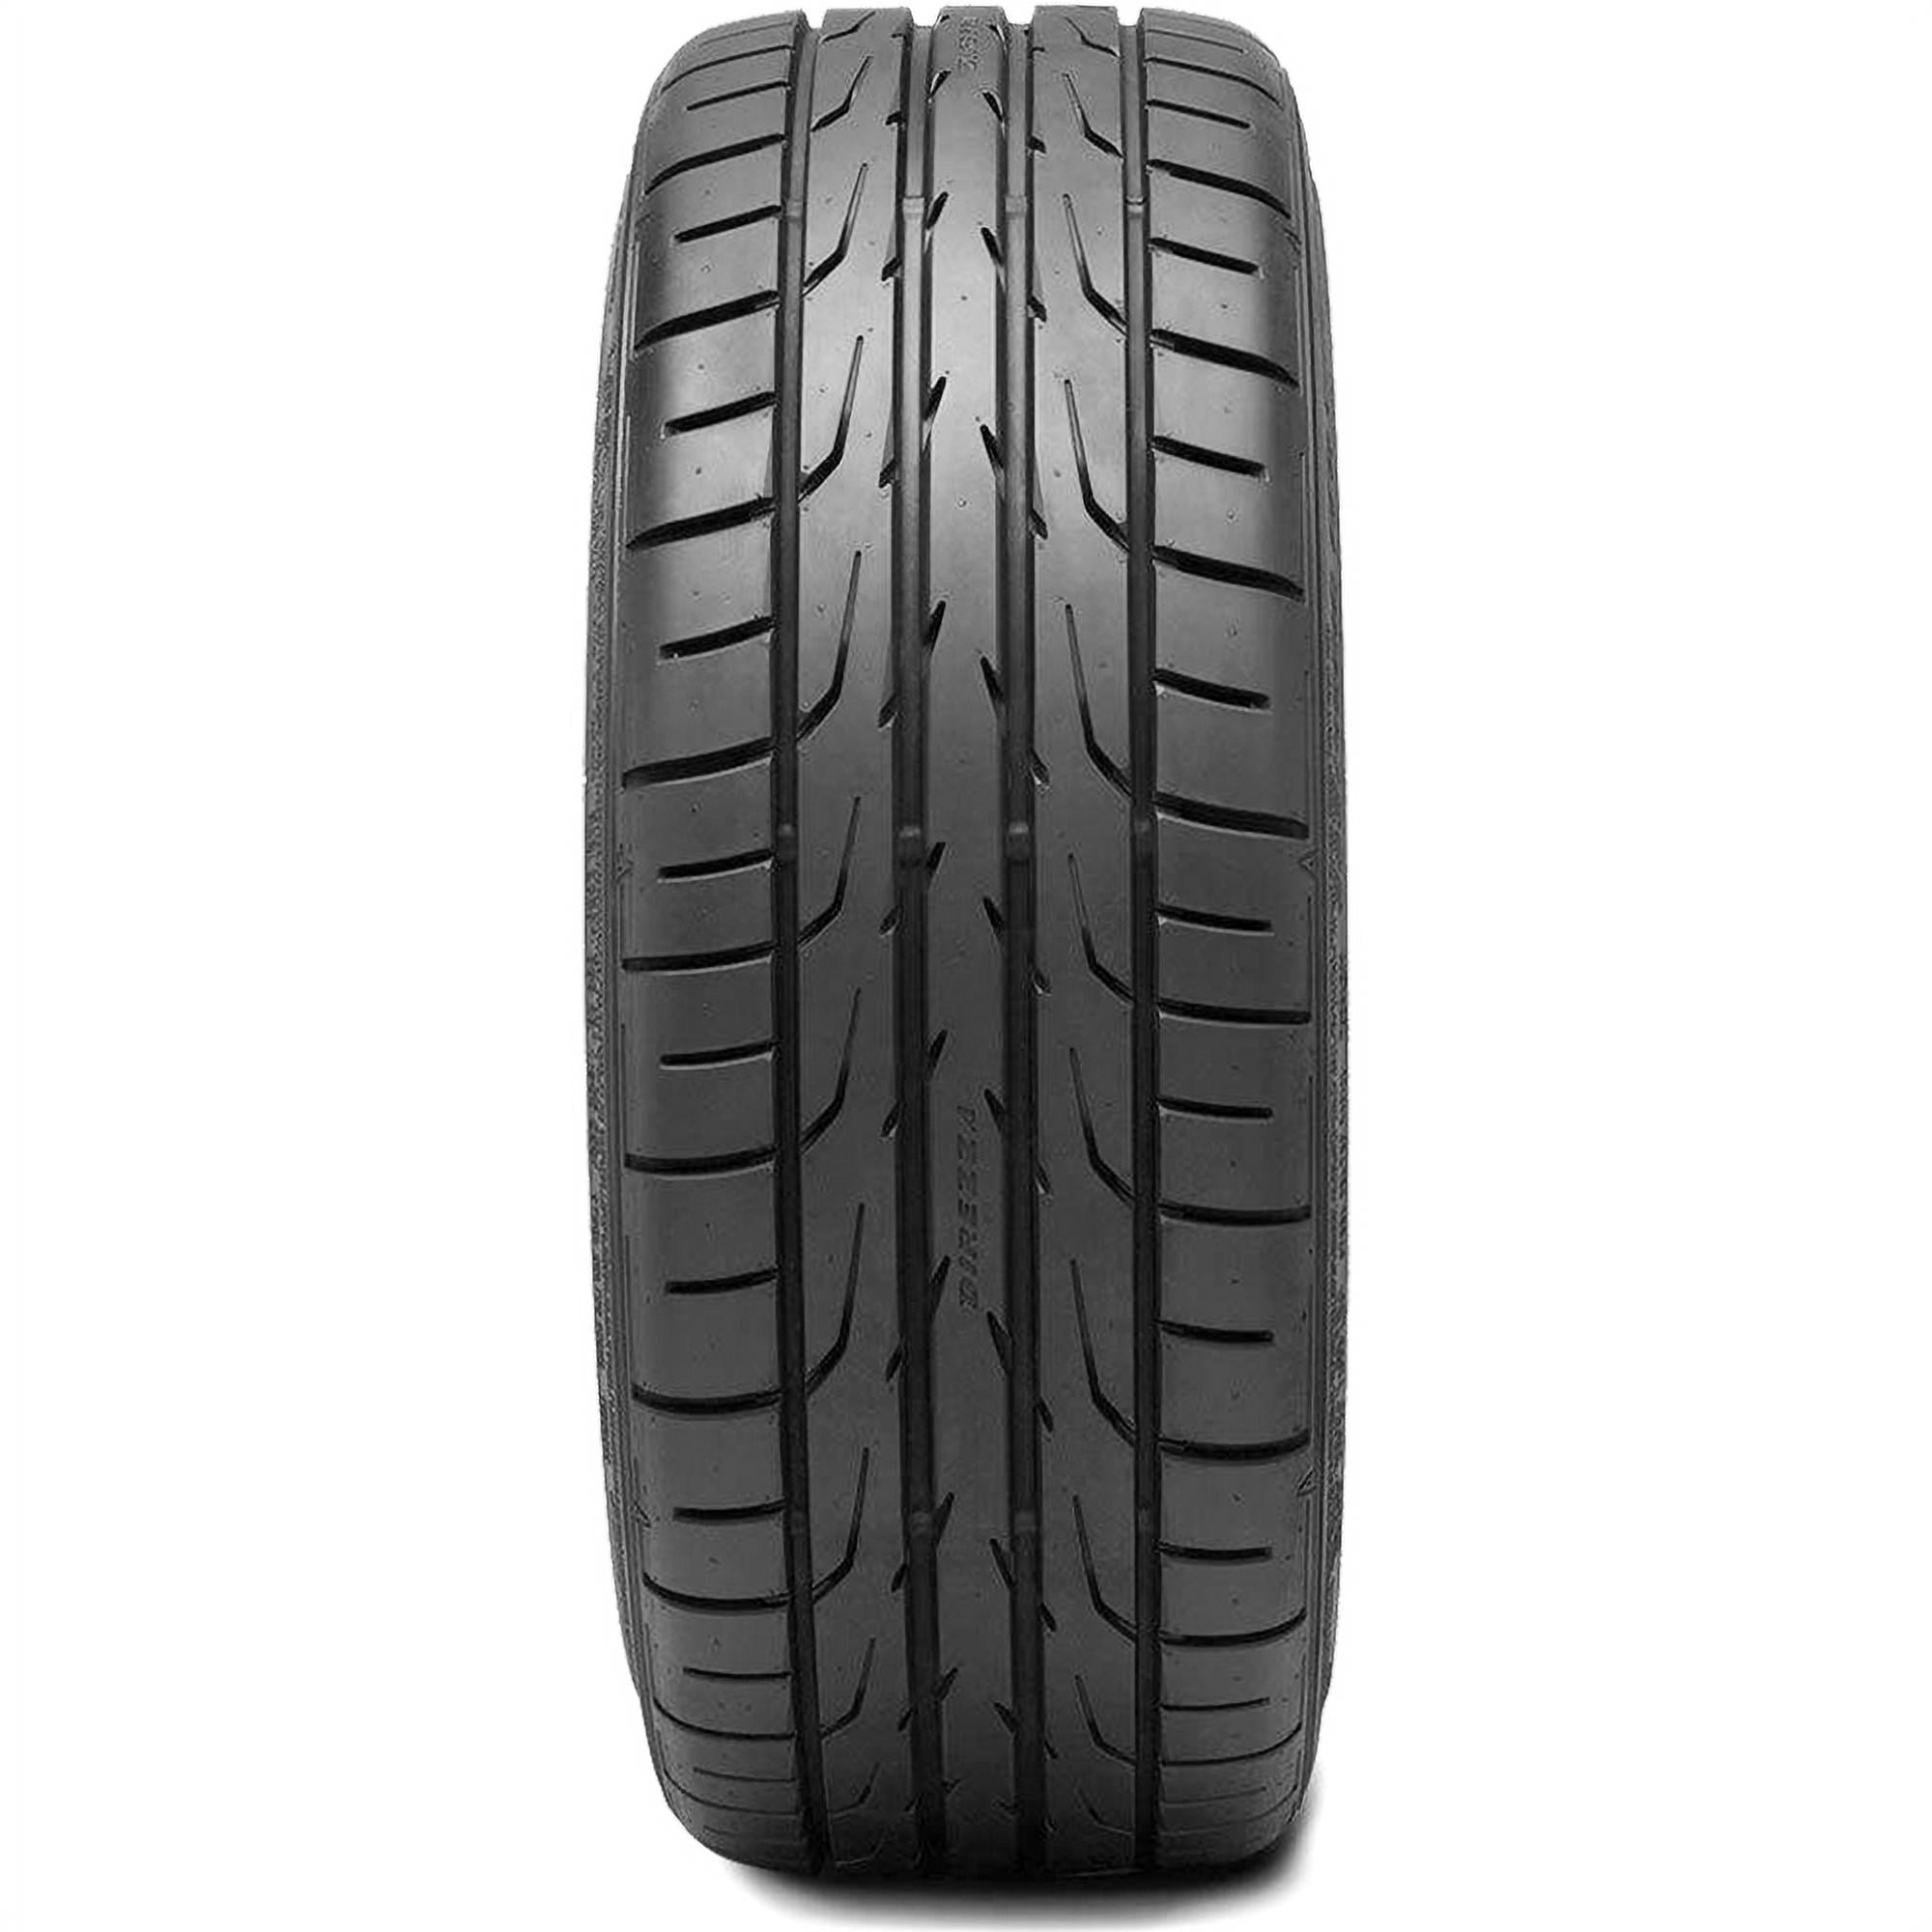 Dunlop Direzza DZ102 205/55R16 91V High Performance Tire